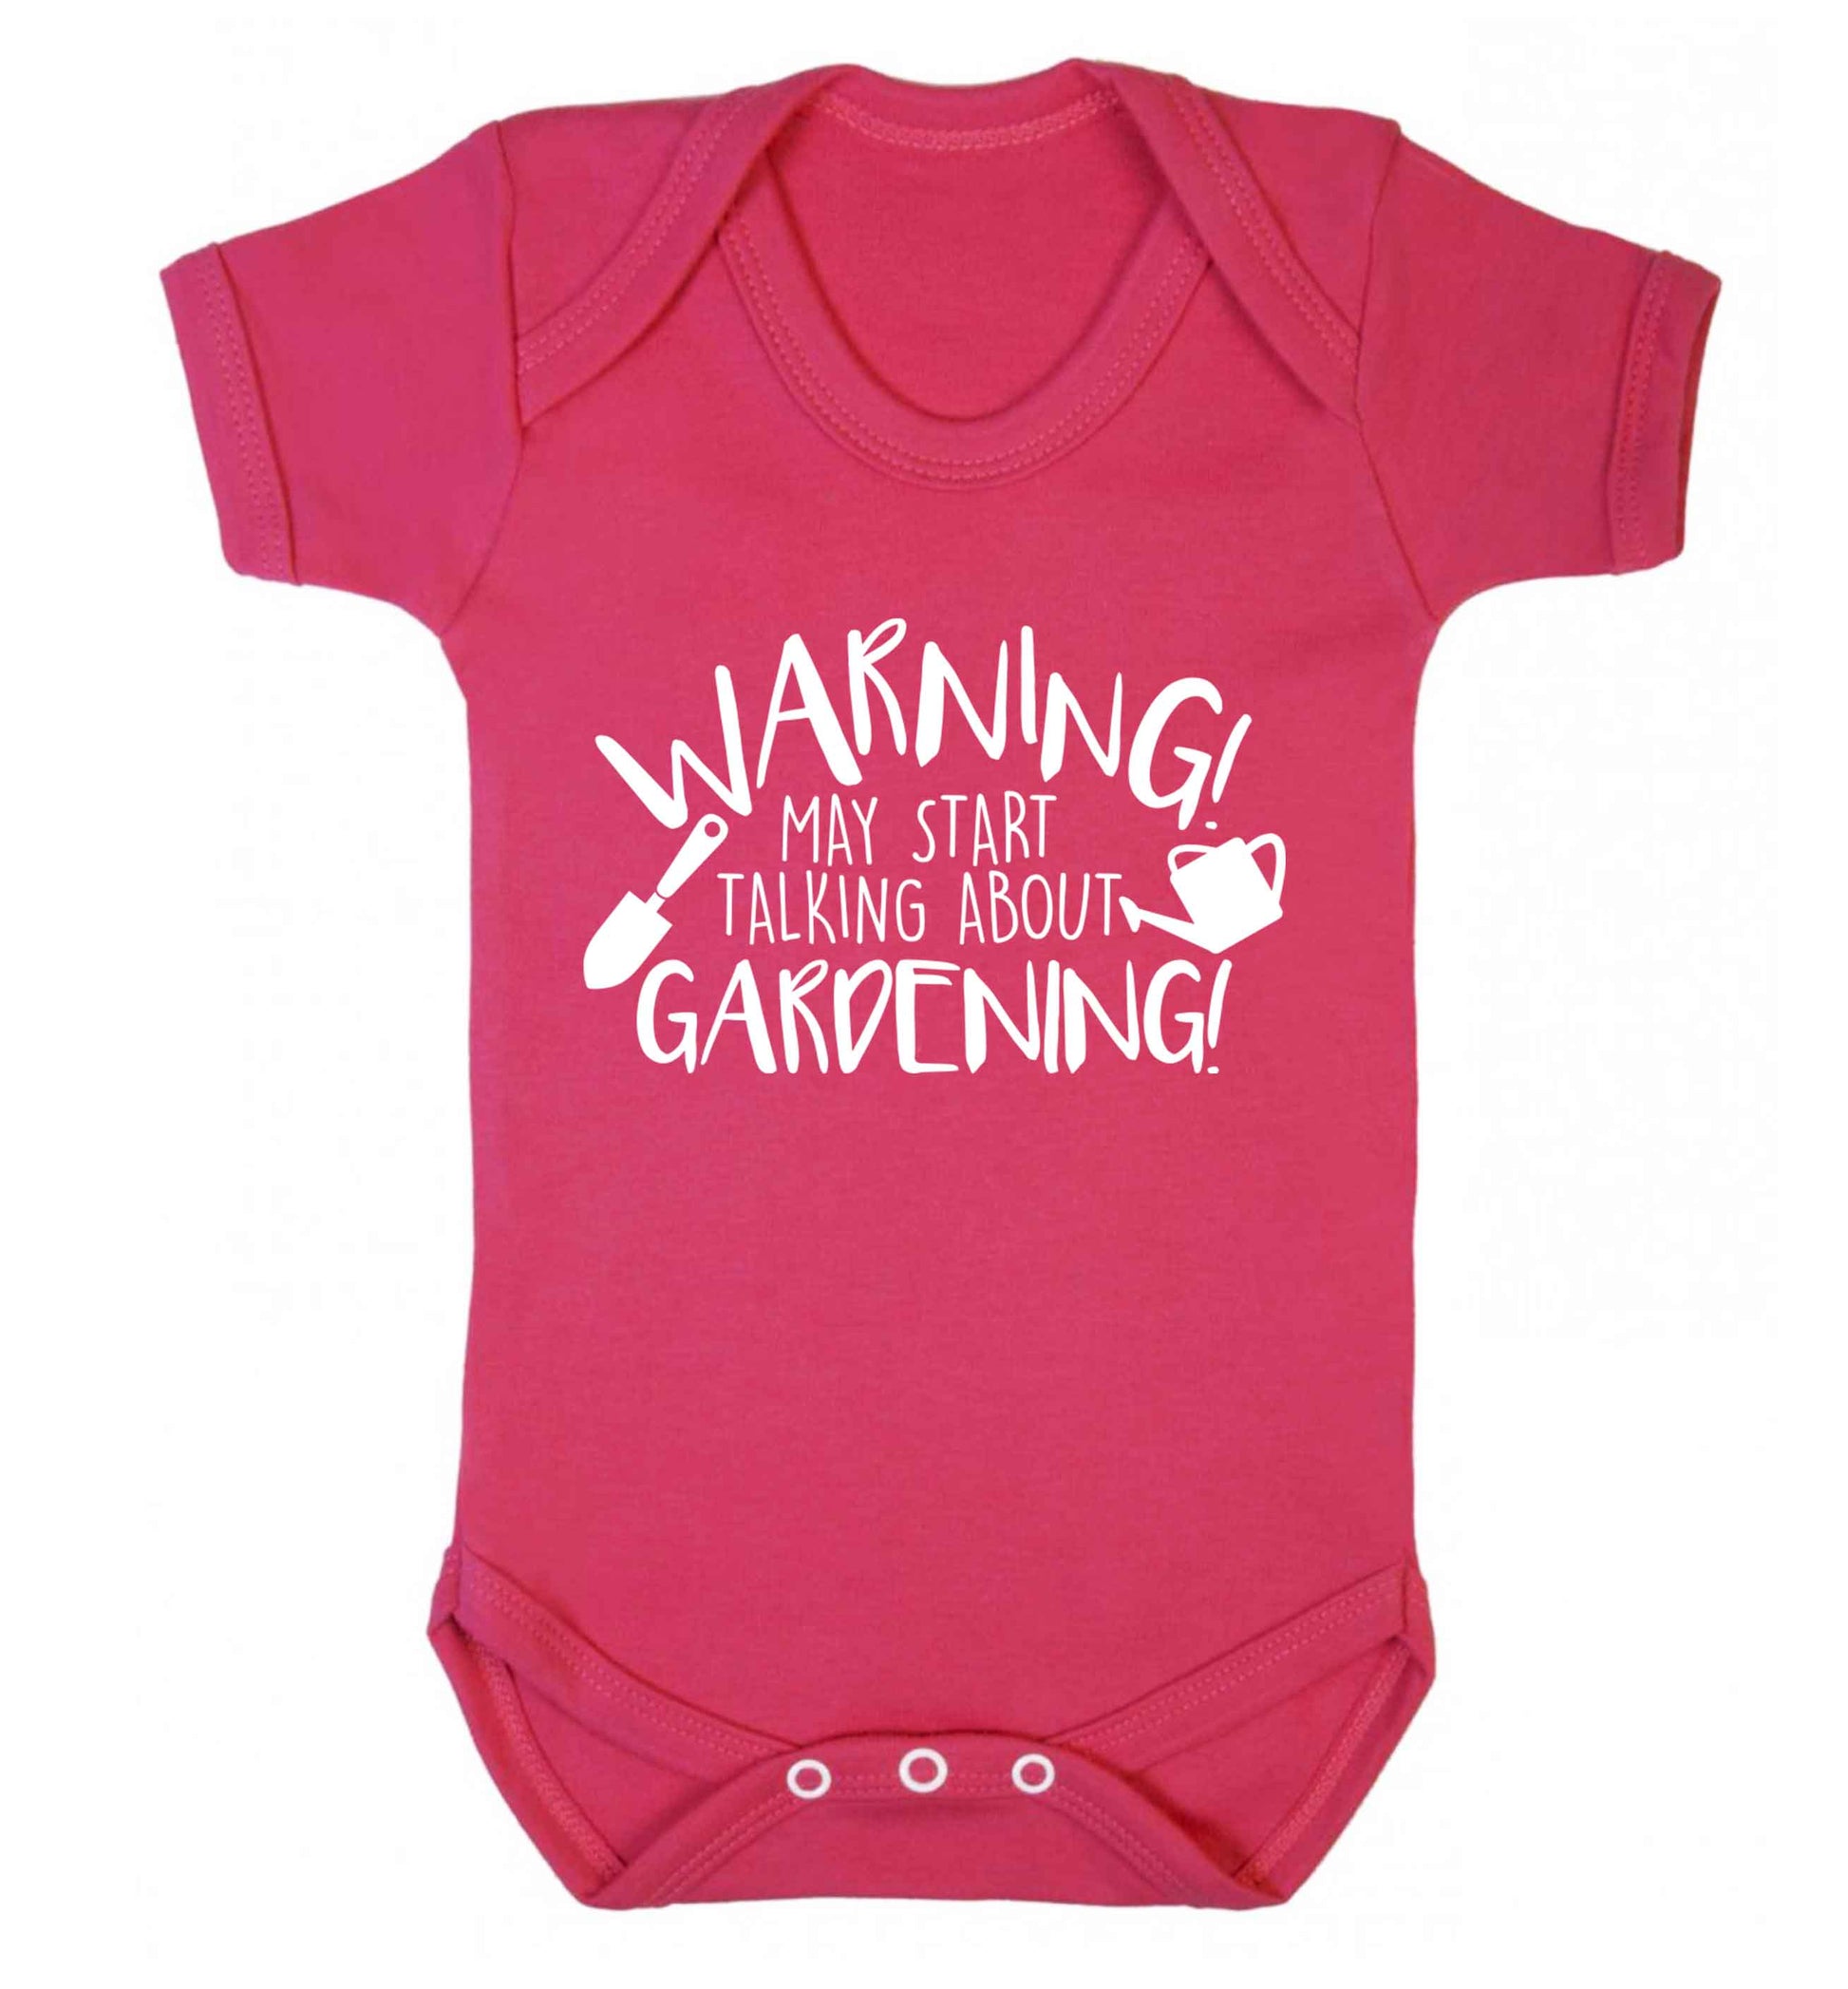 Warning may start talking about gardening Baby Vest dark pink 18-24 months